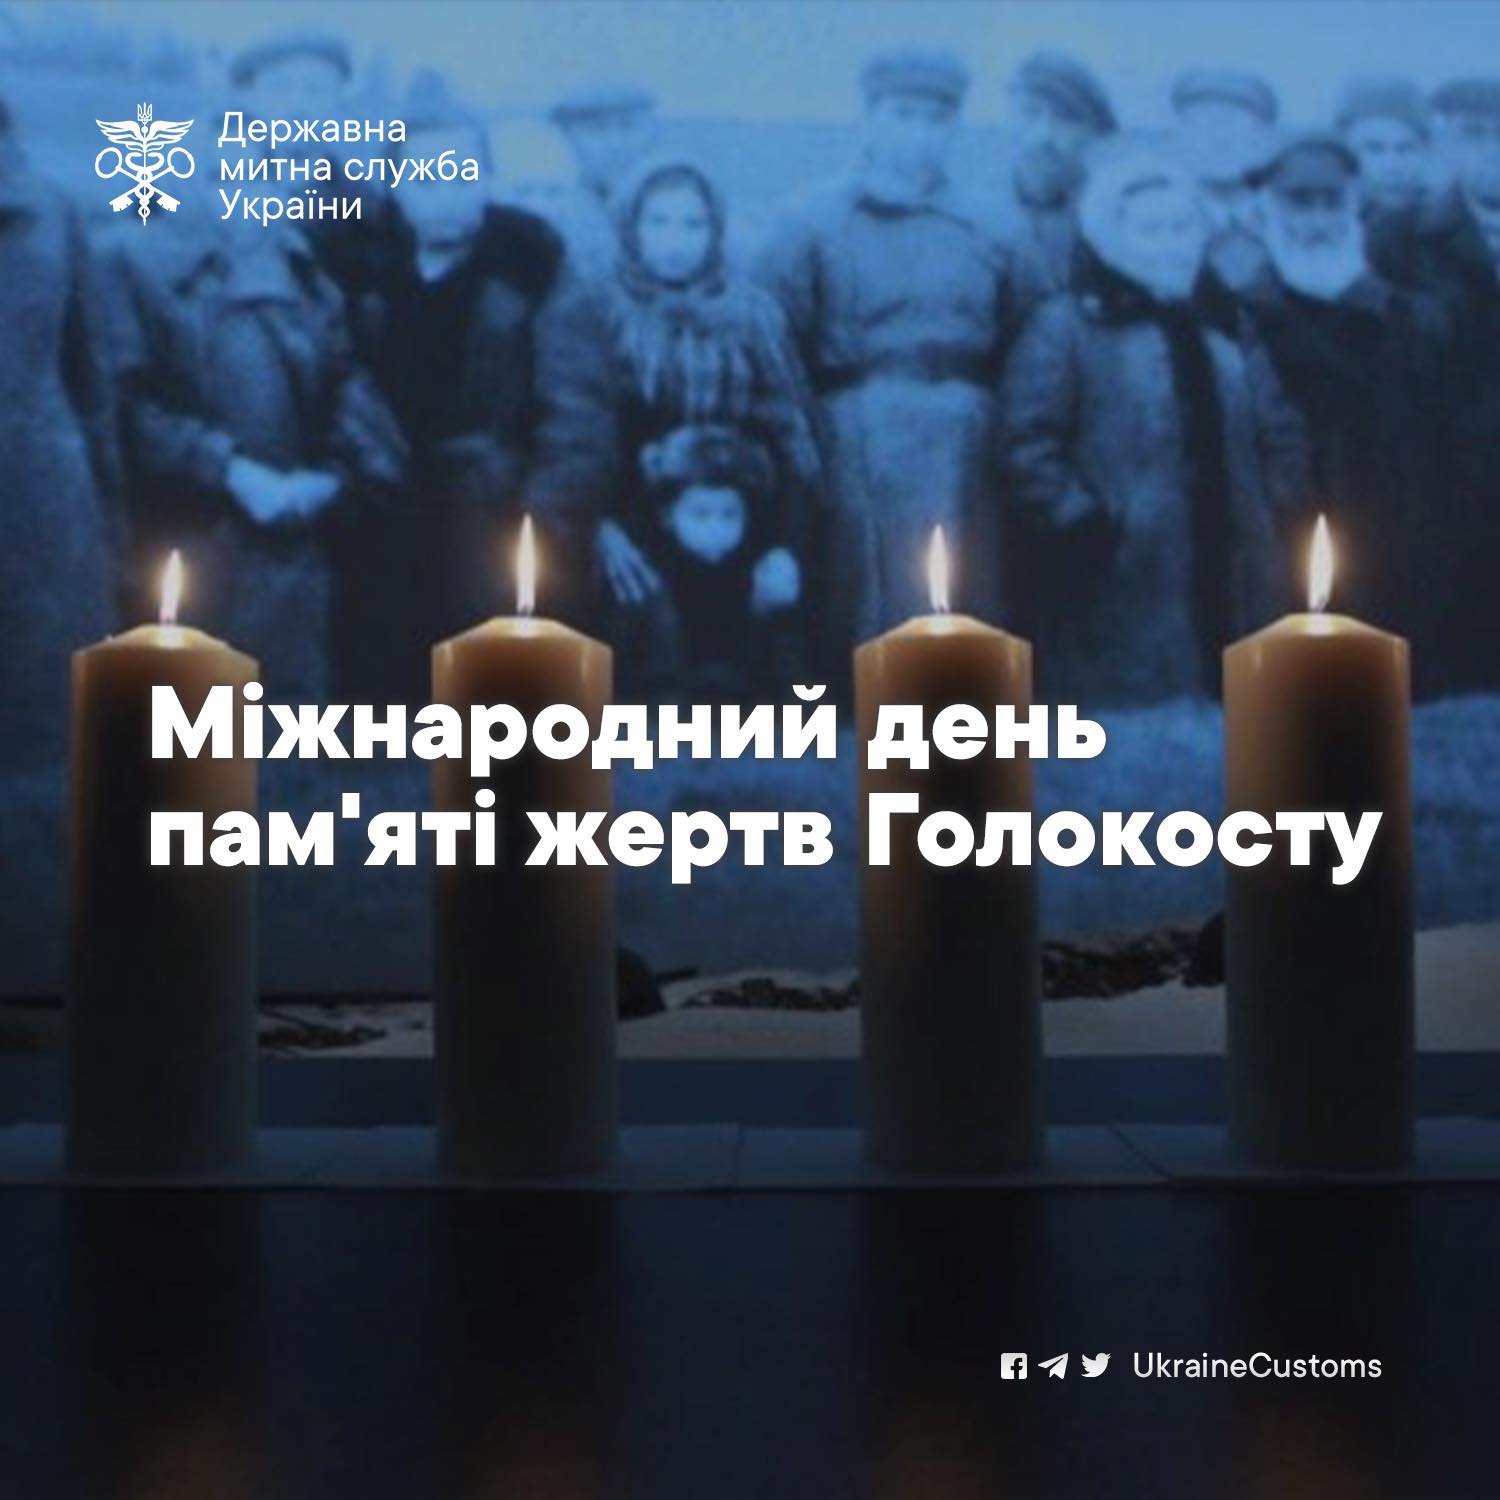 You are currently viewing Міжнародний день пам’яті жертв Голокосту